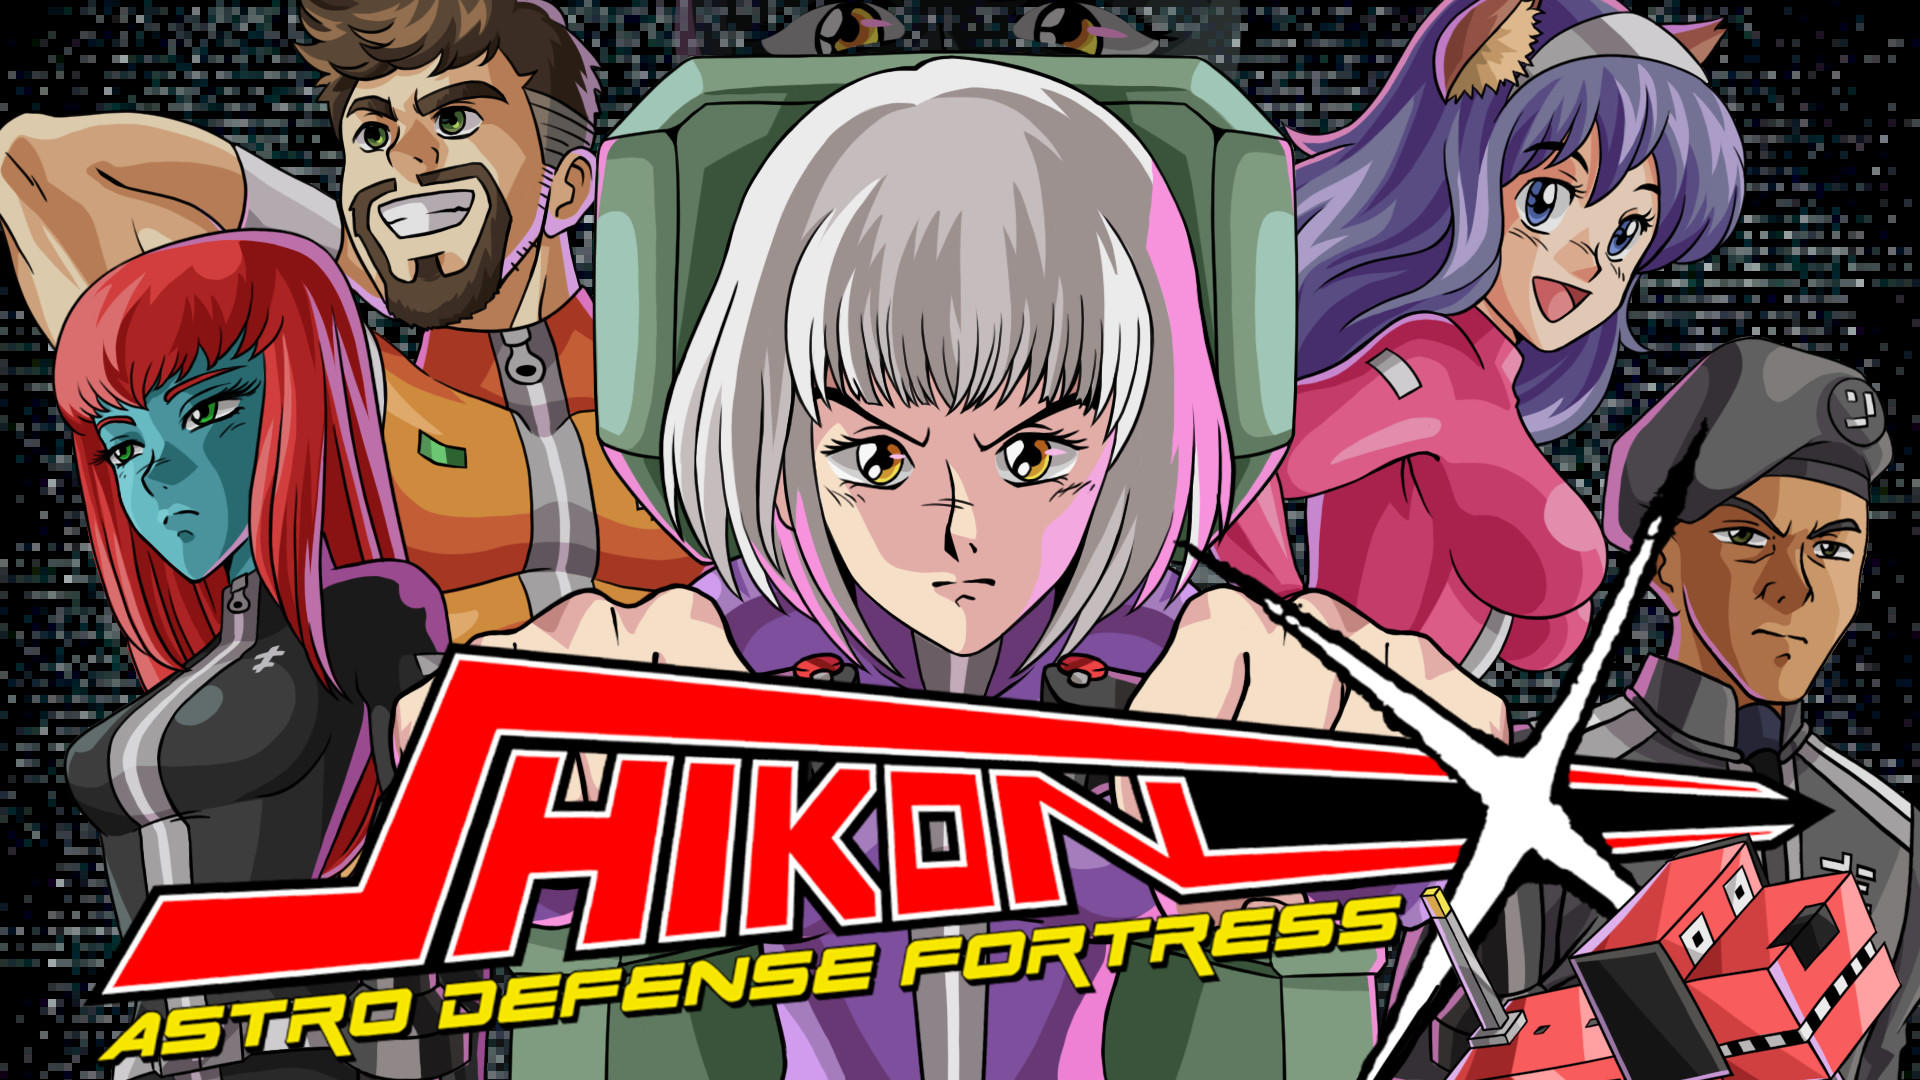 Shikon-X Astro Defense Fortress screenshot game